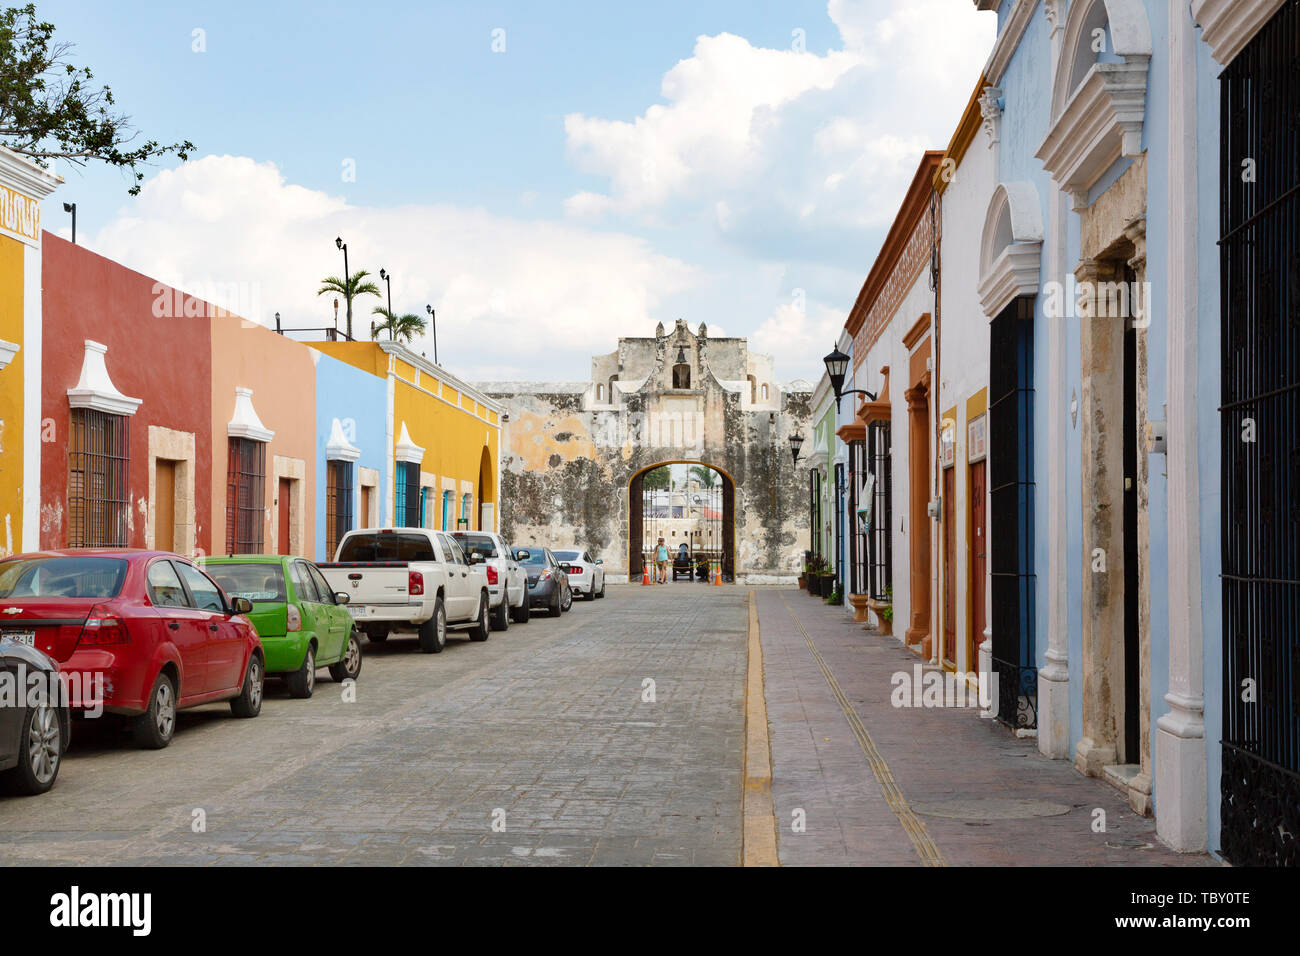 Campeche Mexiko - farbenfrohe Gebäude und Straßen in Campeche Altstadt, Weltkulturerbe der UNESCO, Campeche, Yucatán Mexiko Mittelamerika Reisen Stockfoto